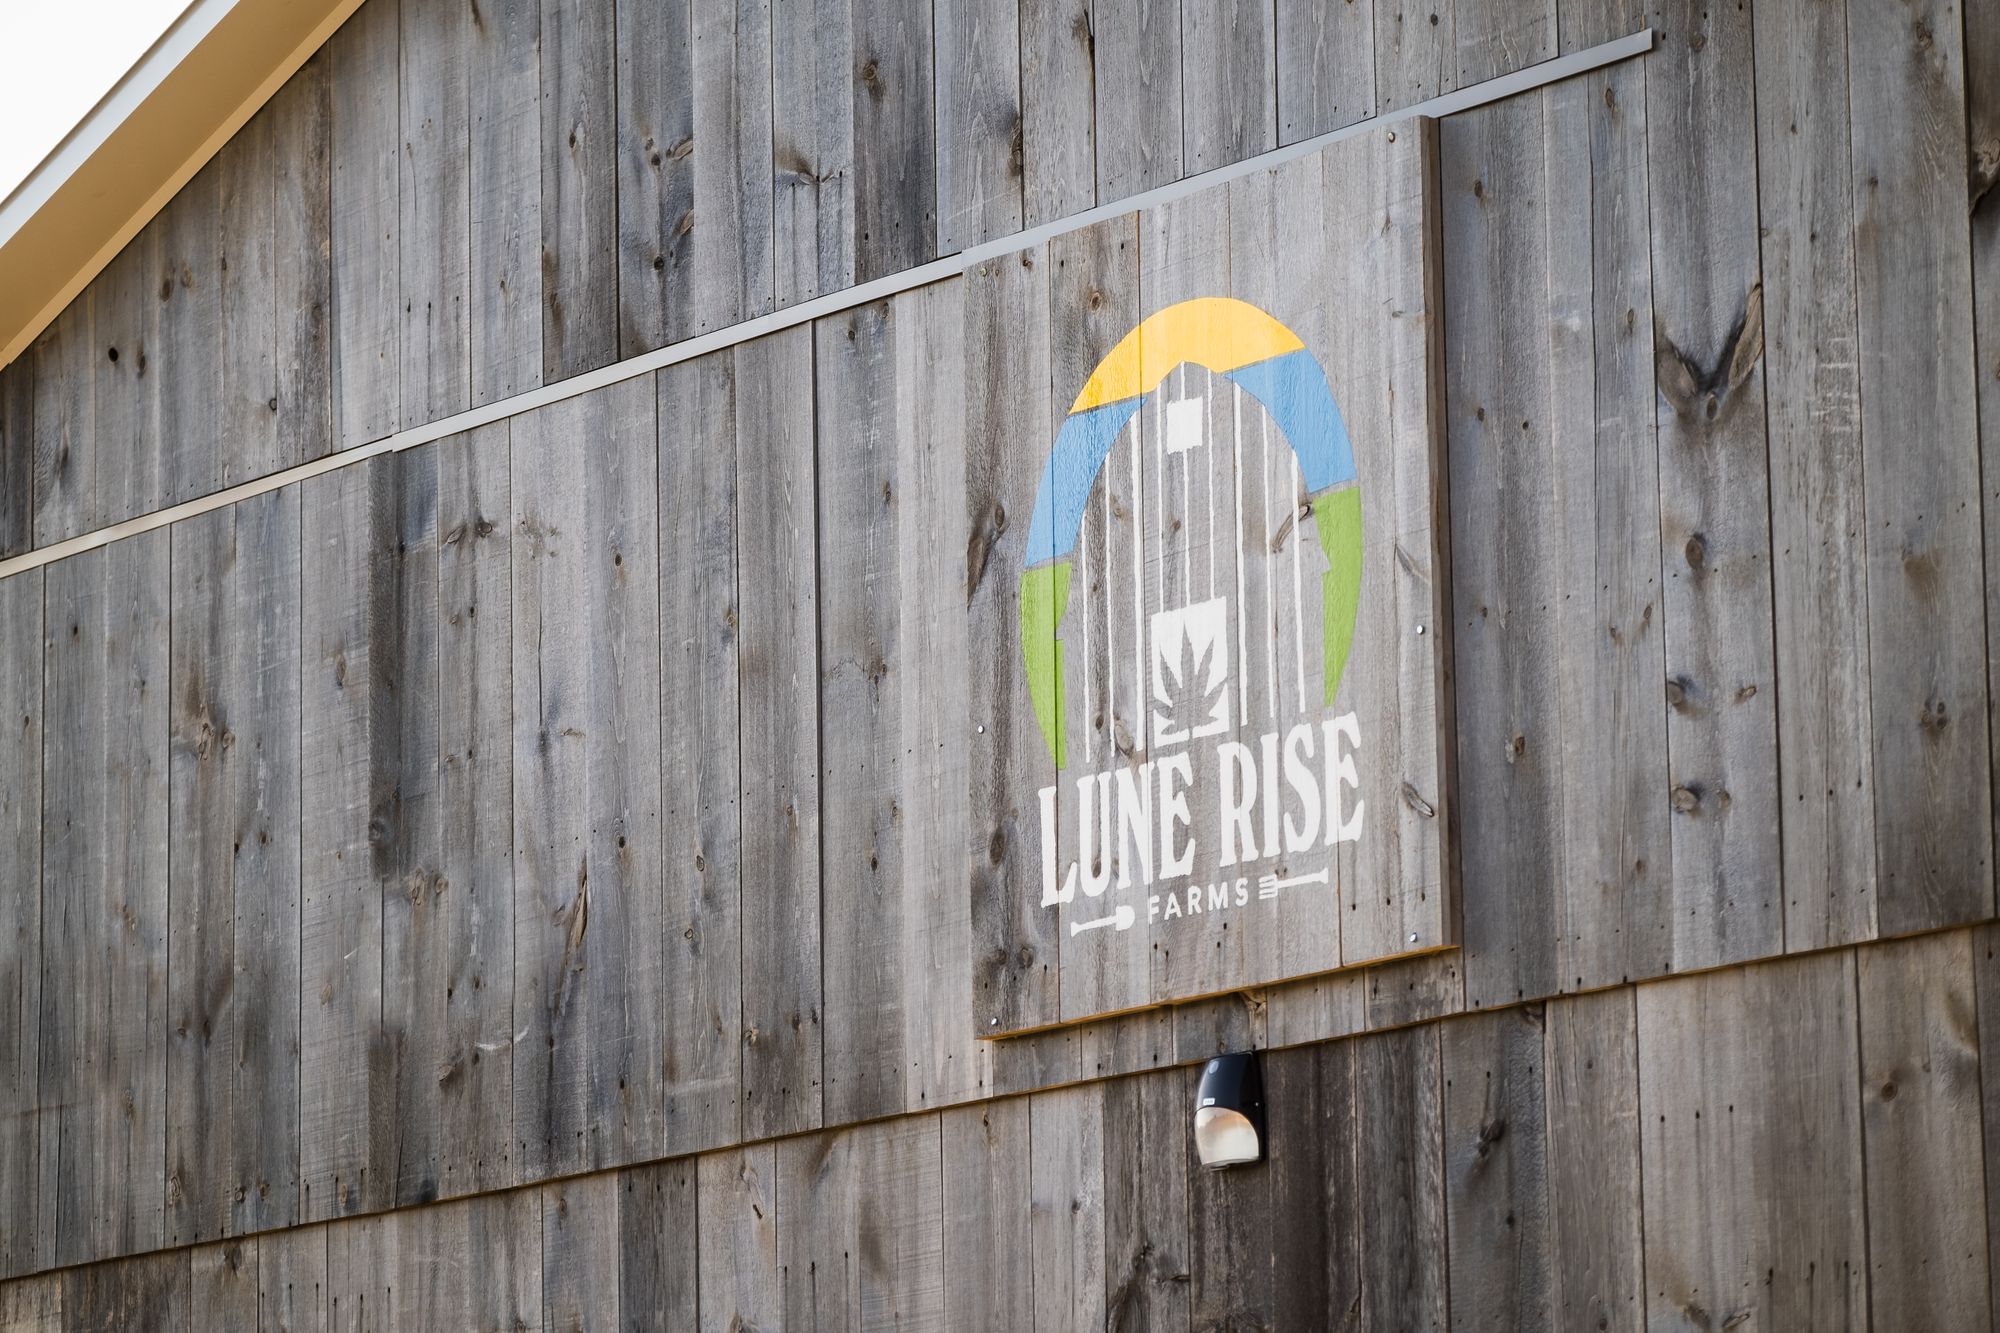 Farm crafted, Community-focused - Lune Rise Farms